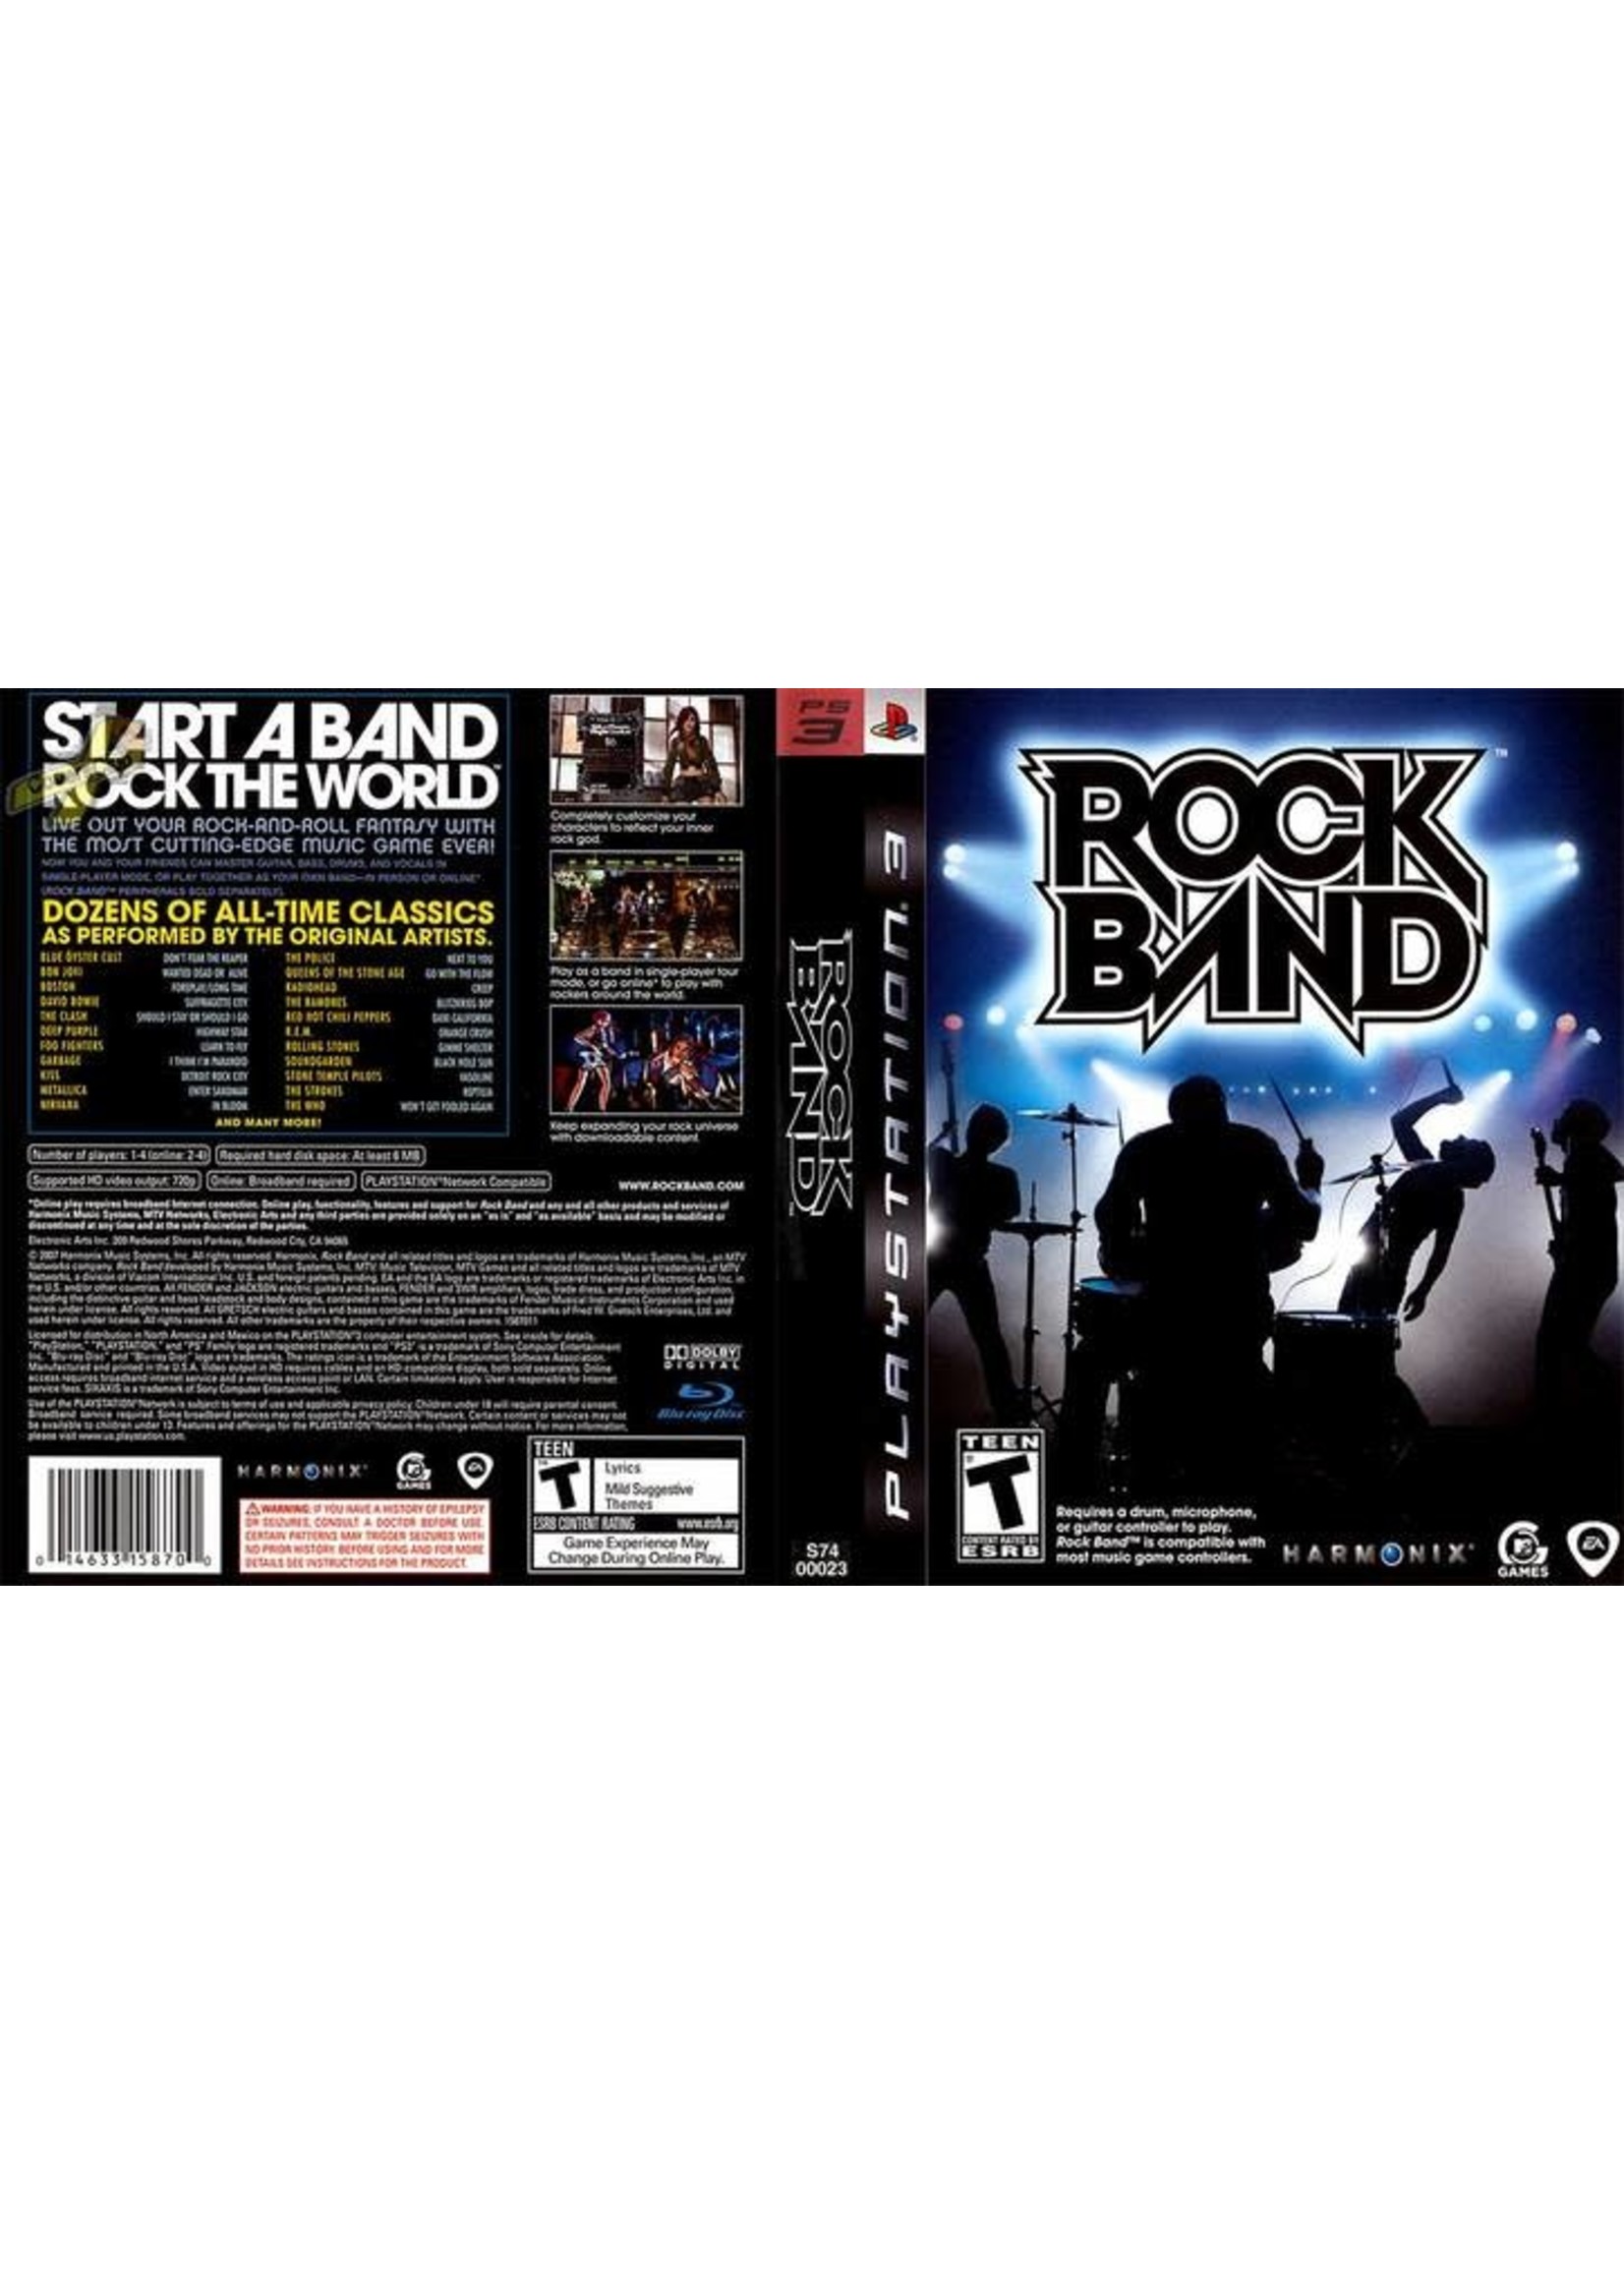 Sony Playstation 3 (PS3) Rock Band